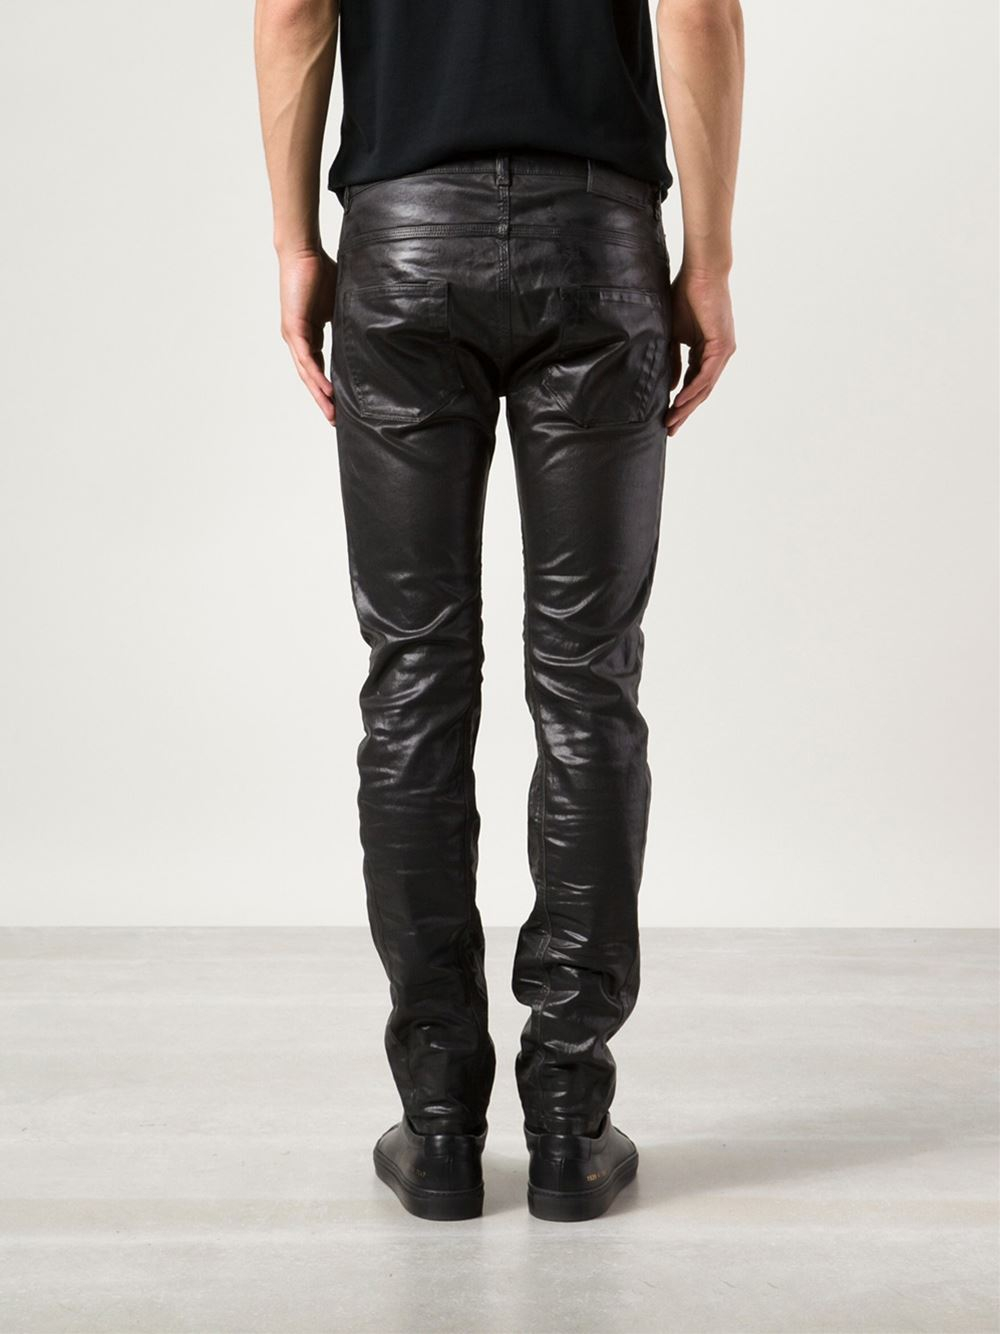 Diesel Black Gold Coated Skinny Jeans in Black for Men - Lyst